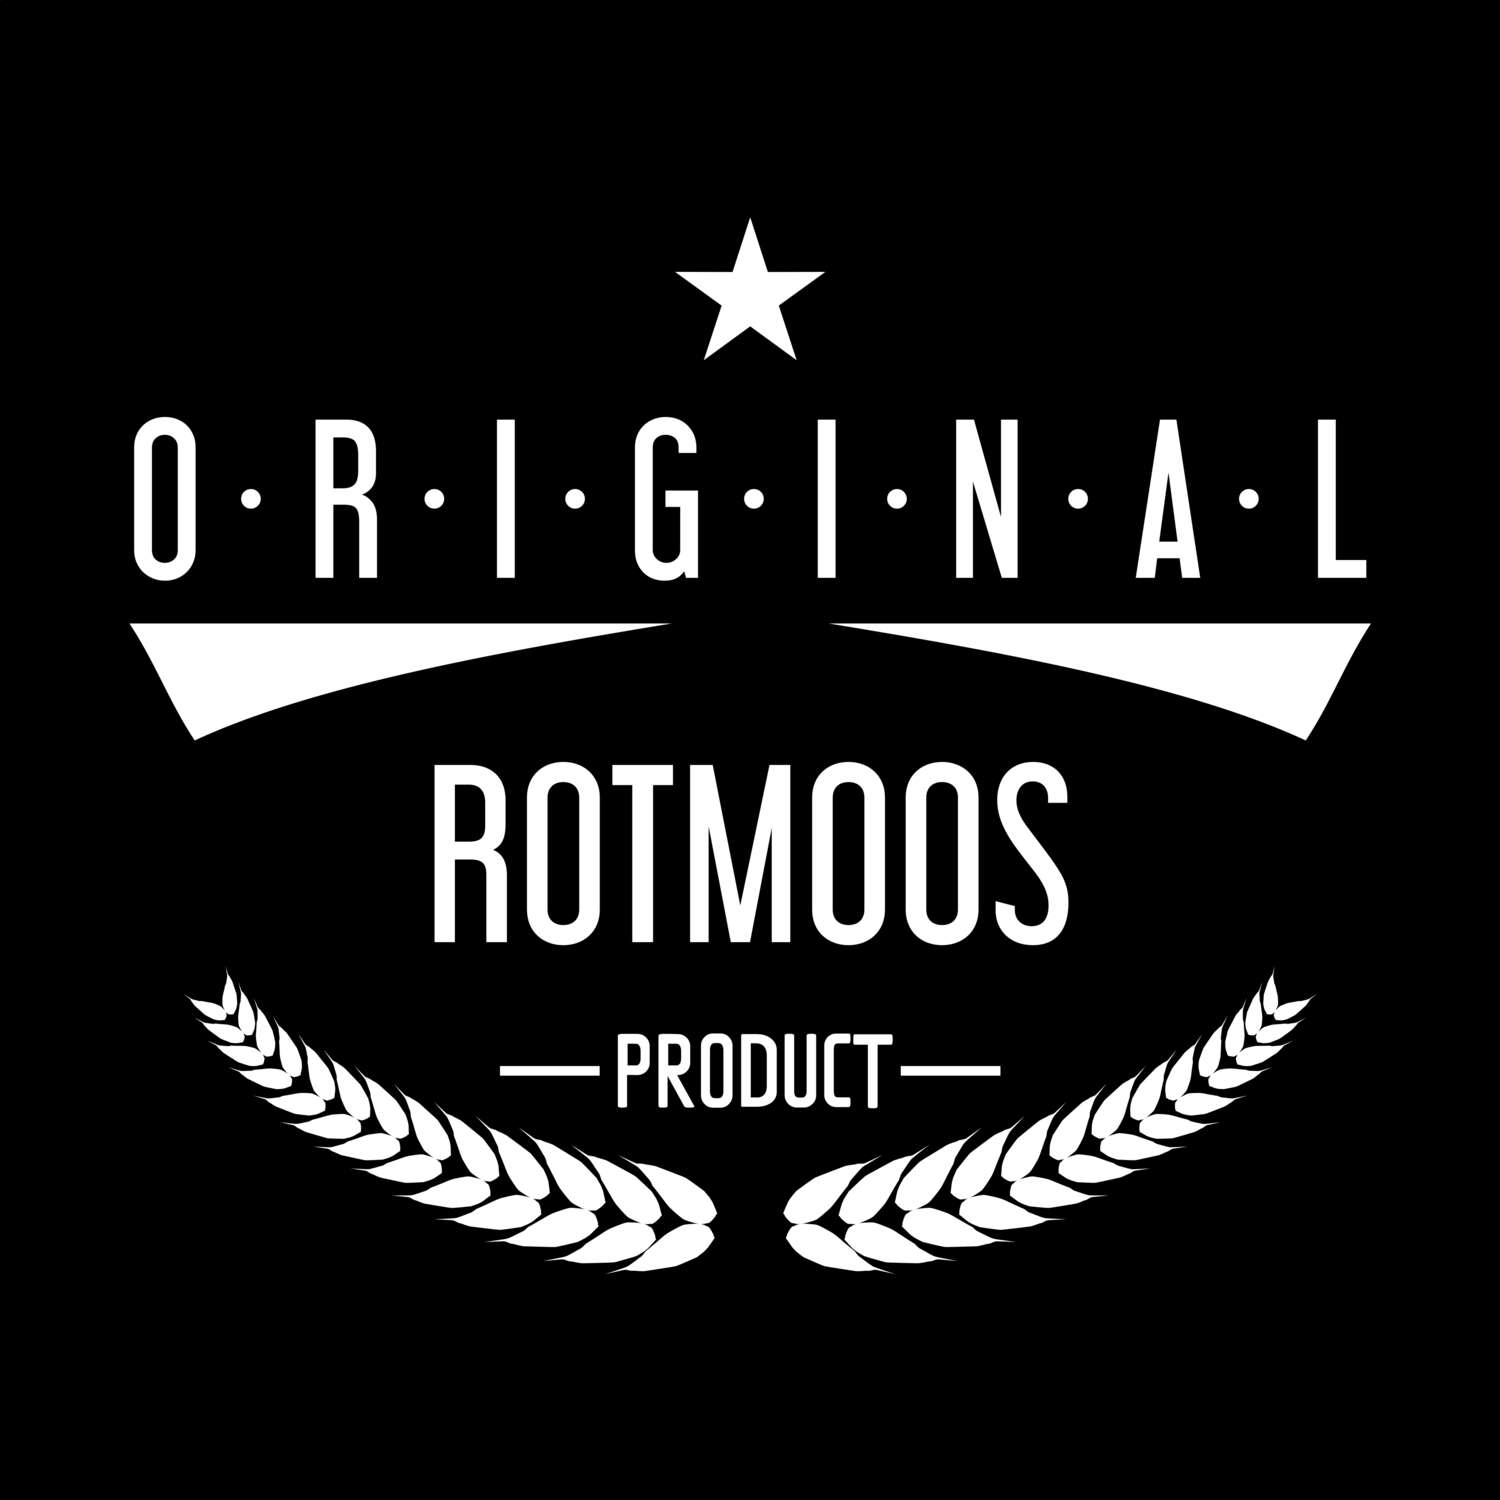 Rotmoos T-Shirt »Original Product«